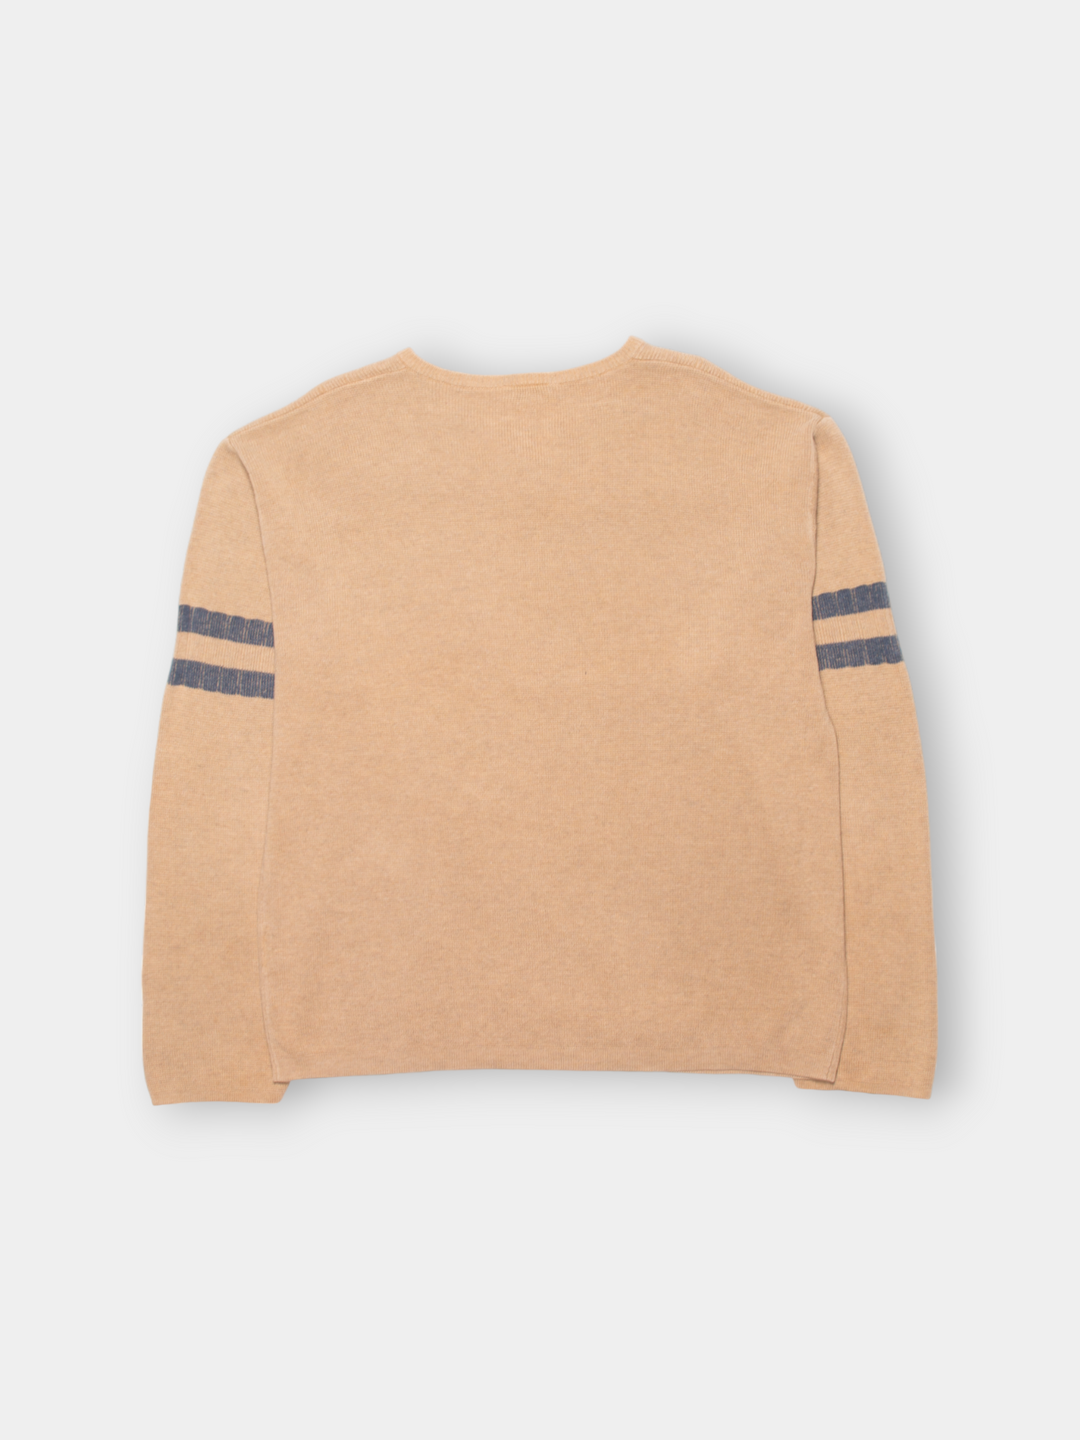 00s Nautica V Neck Sweater (XL)